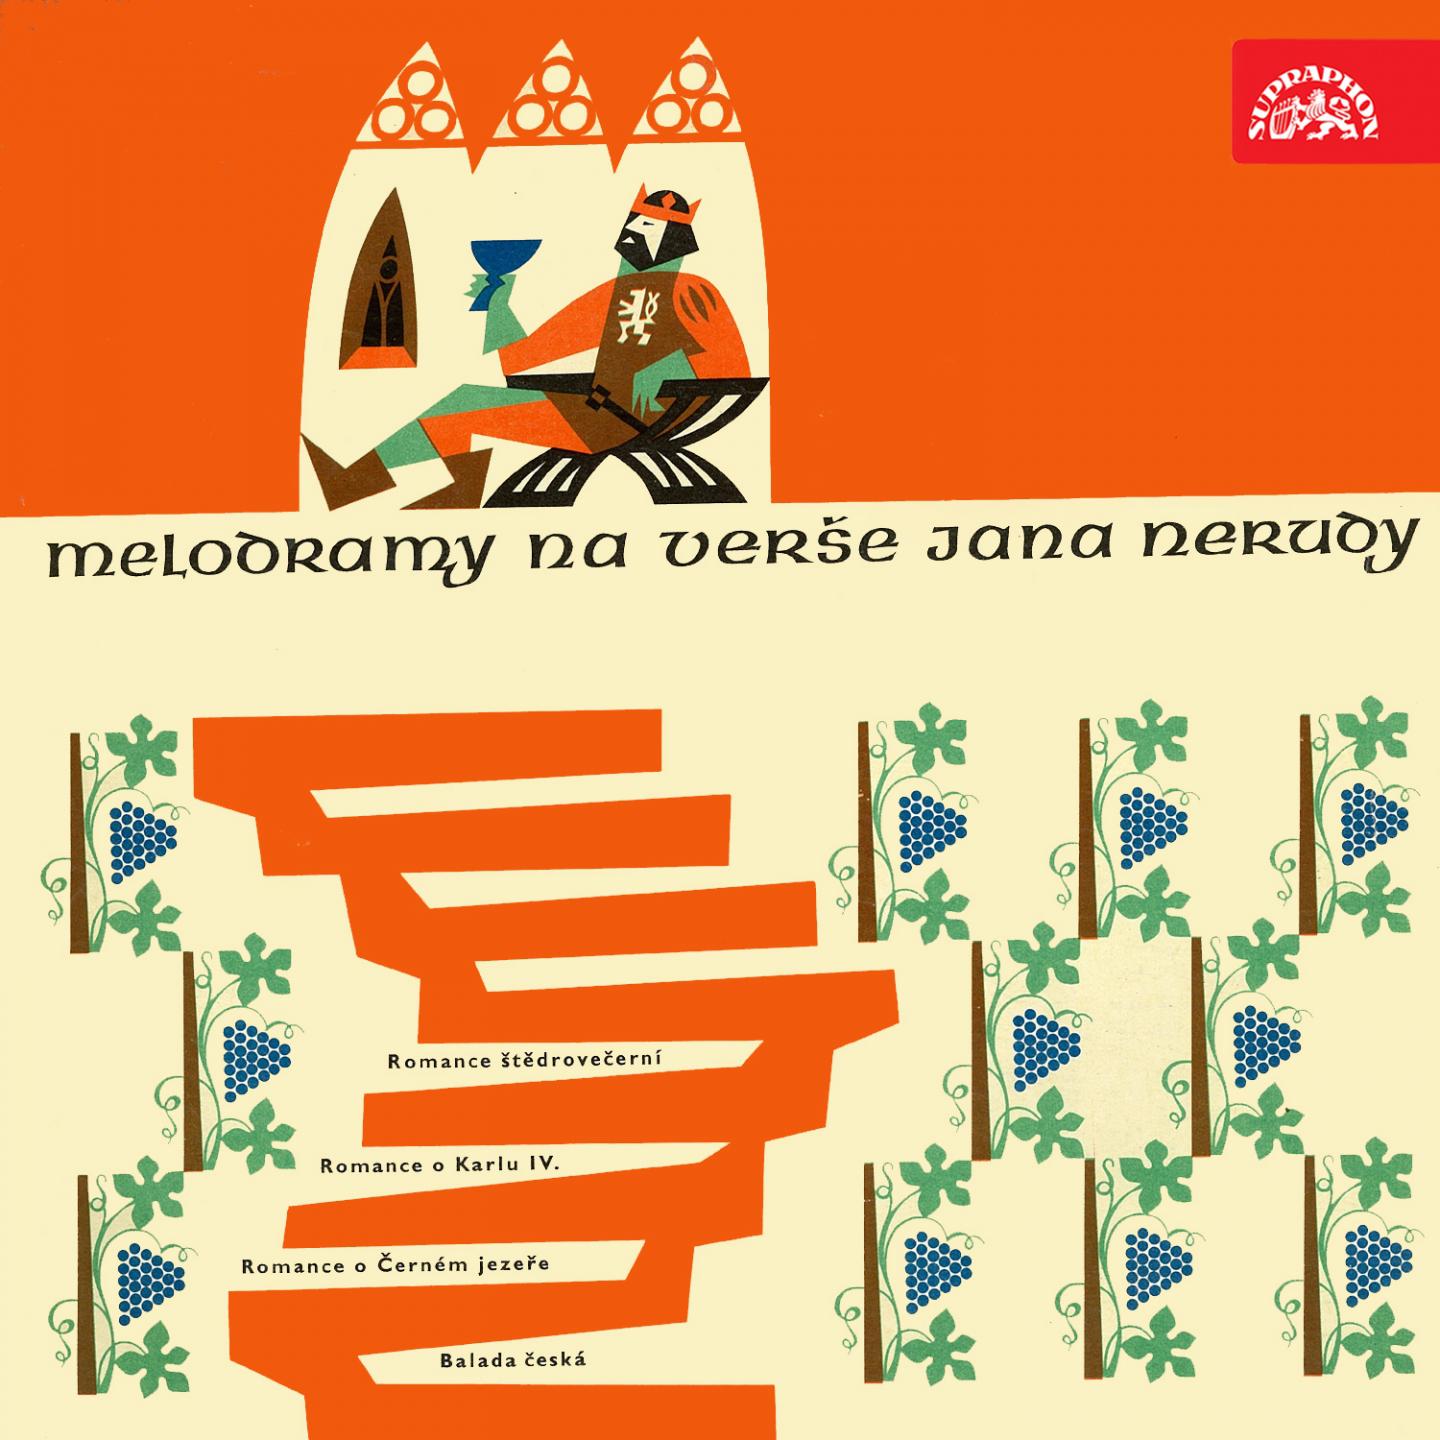 Foerster, Jeremia, Zich, Ostr il: Melodramas on the Lyrics by Jan Neruda